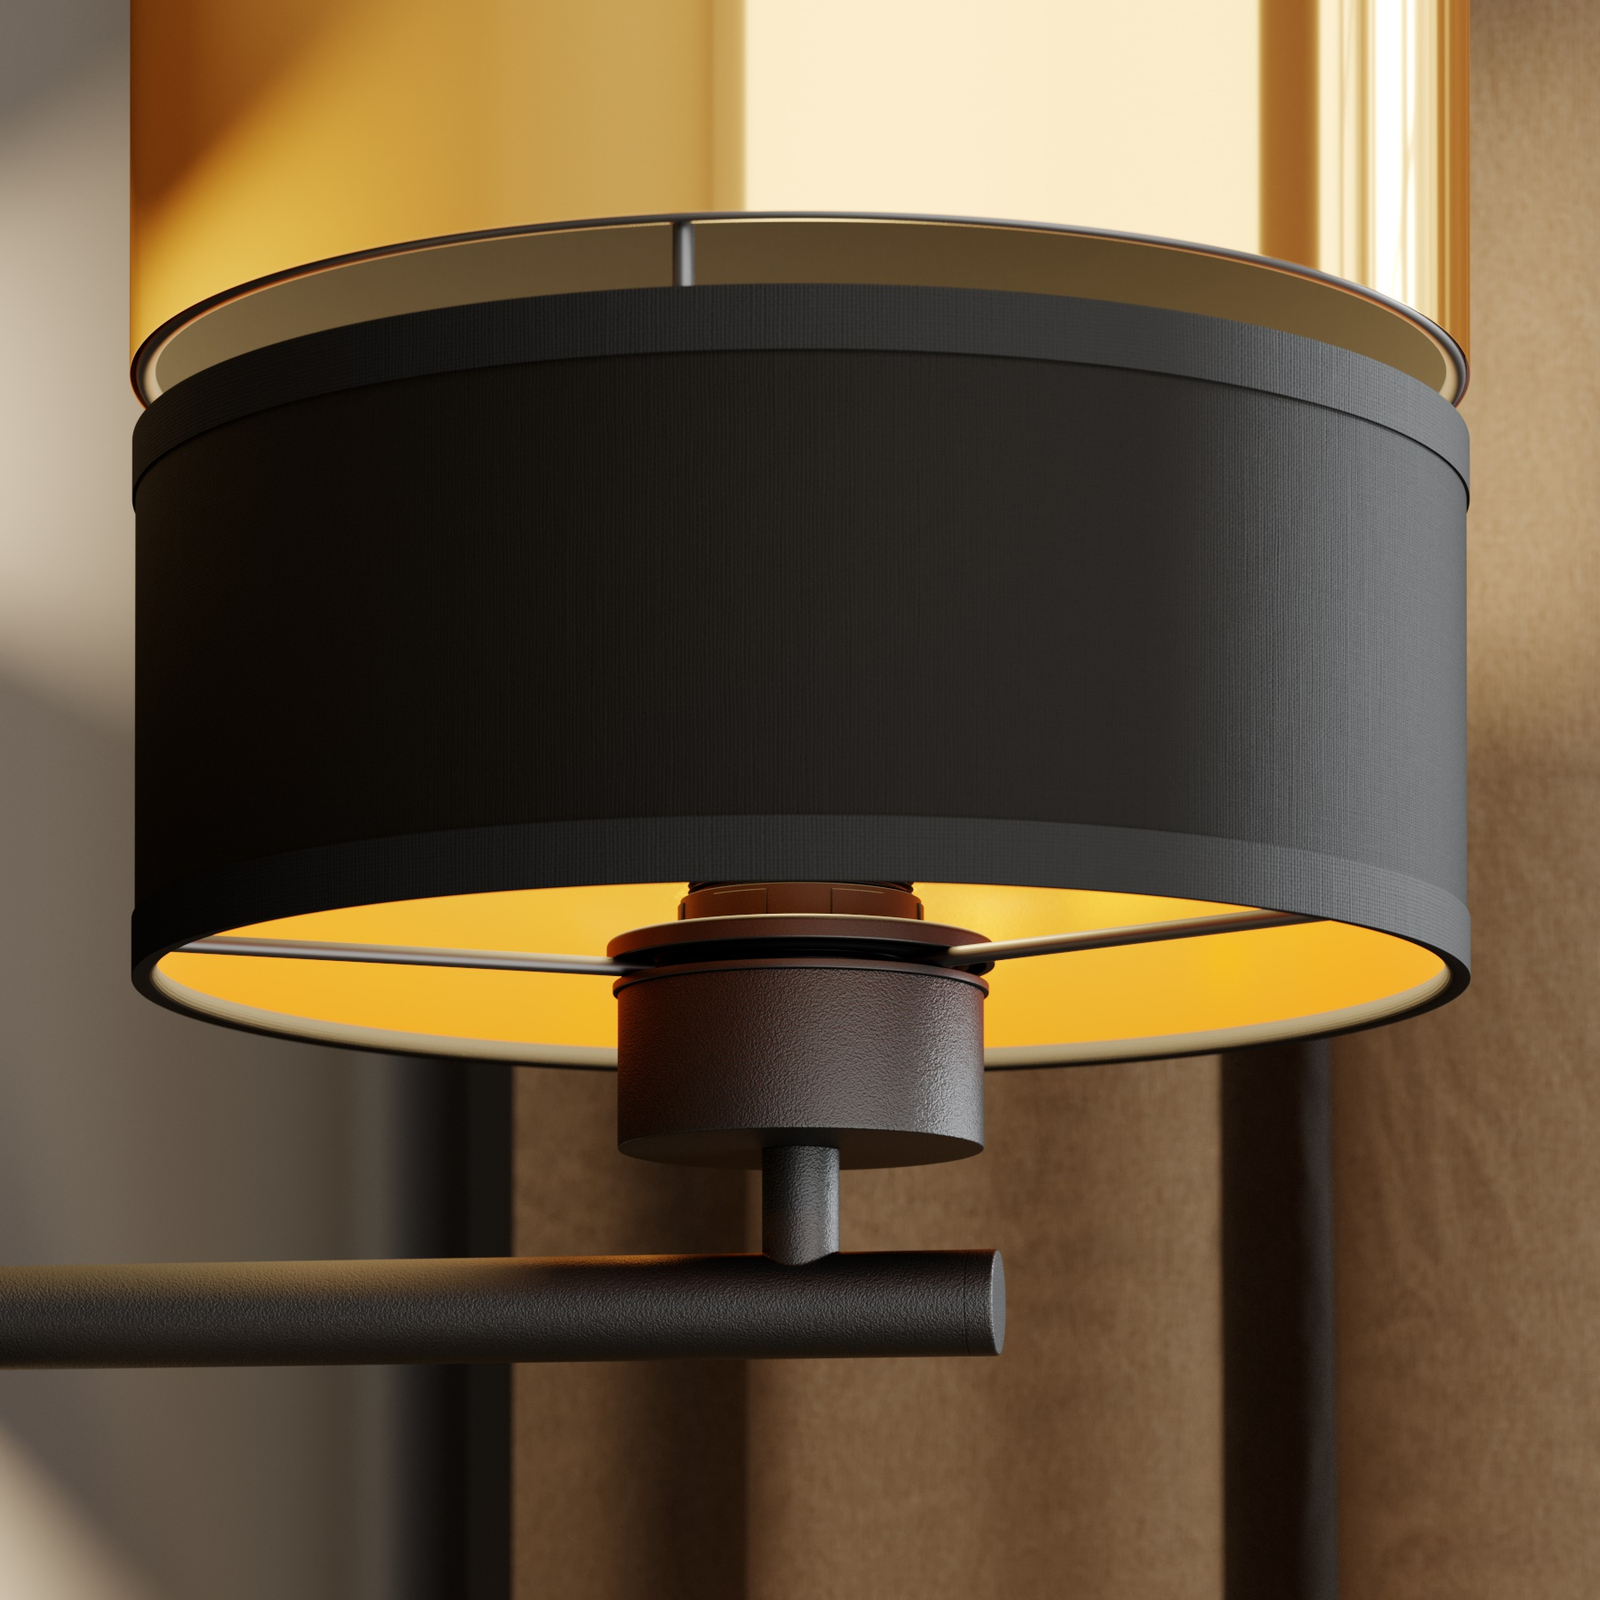 Hilton wandlamp zwart/goud met LED leeslampje